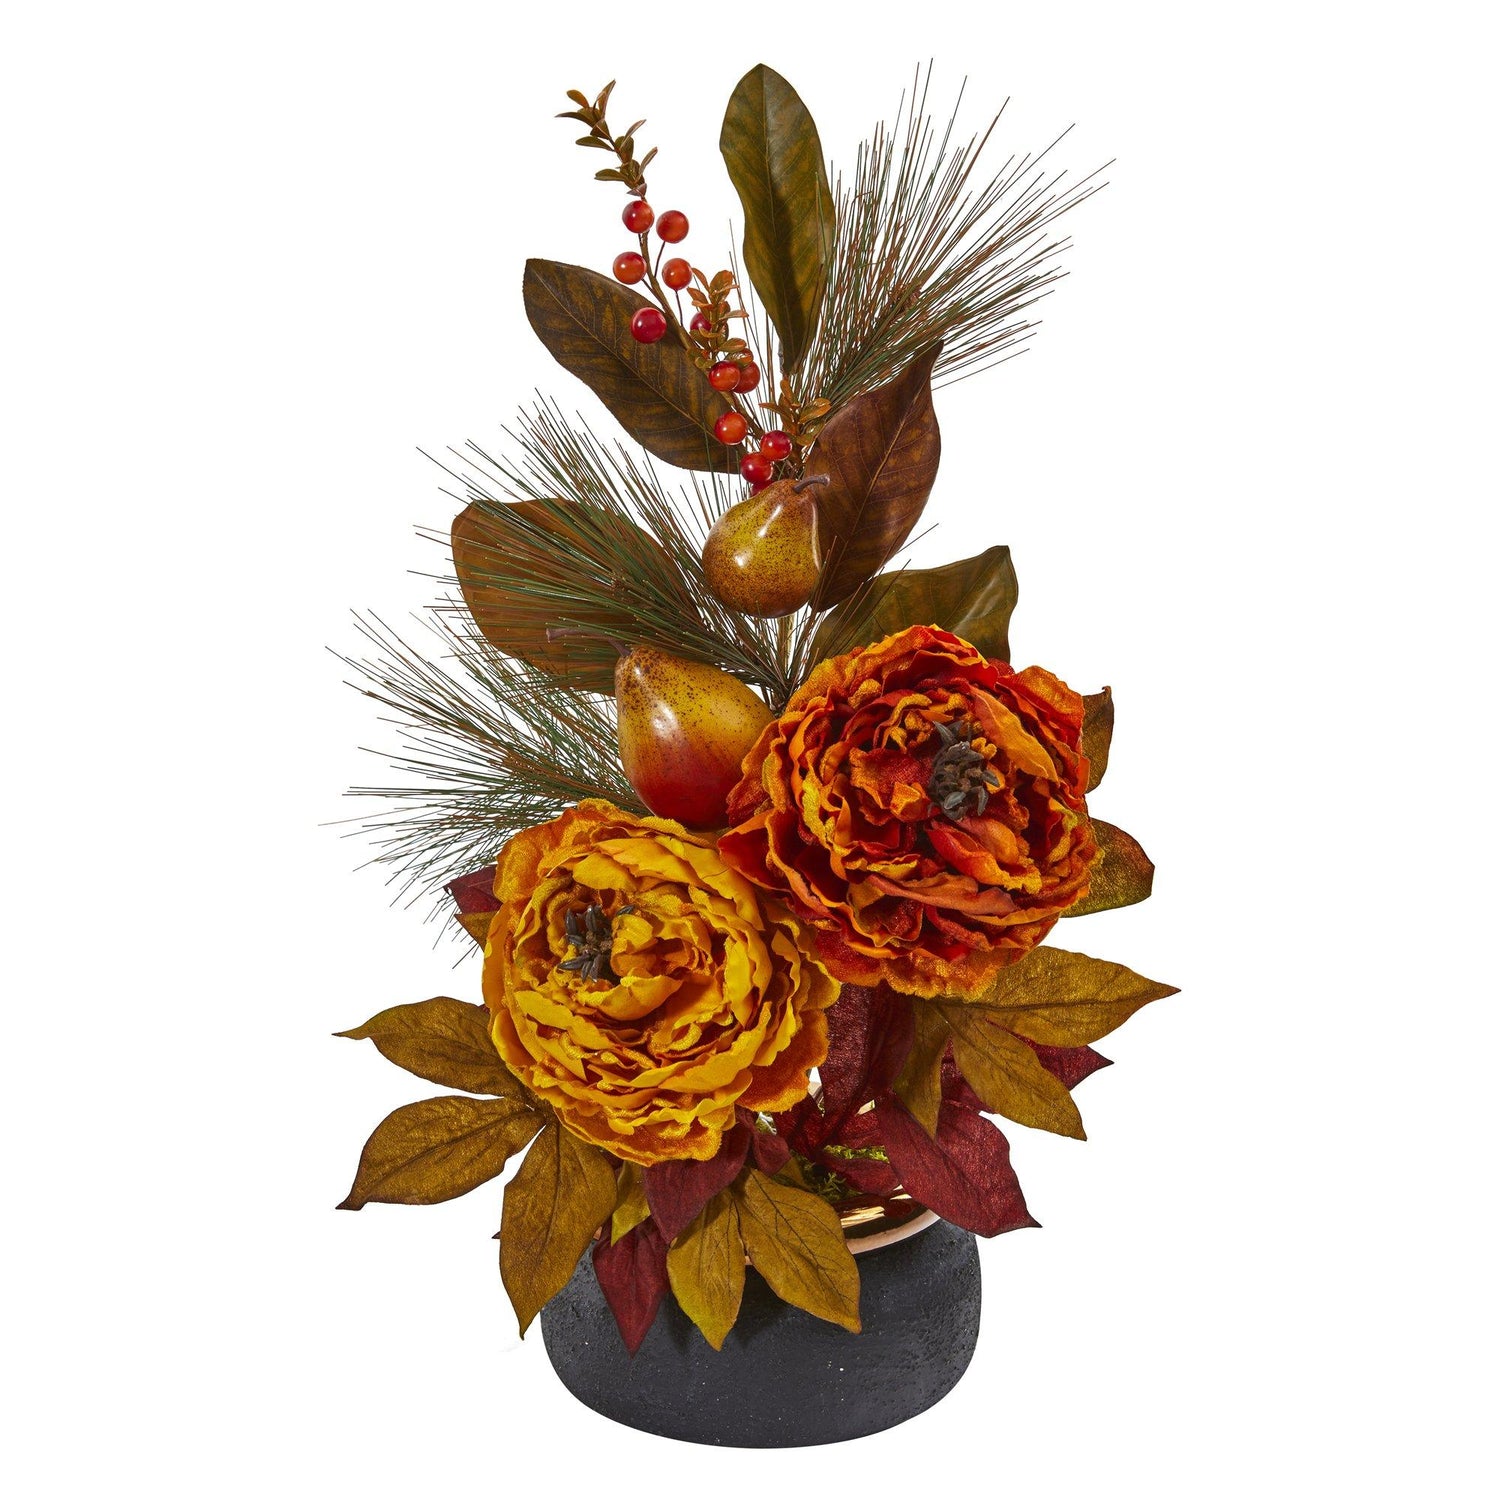 22” Peony, Pear and Magnolia Leaf Artificial Arrangement in Black Vase with Copper Rim